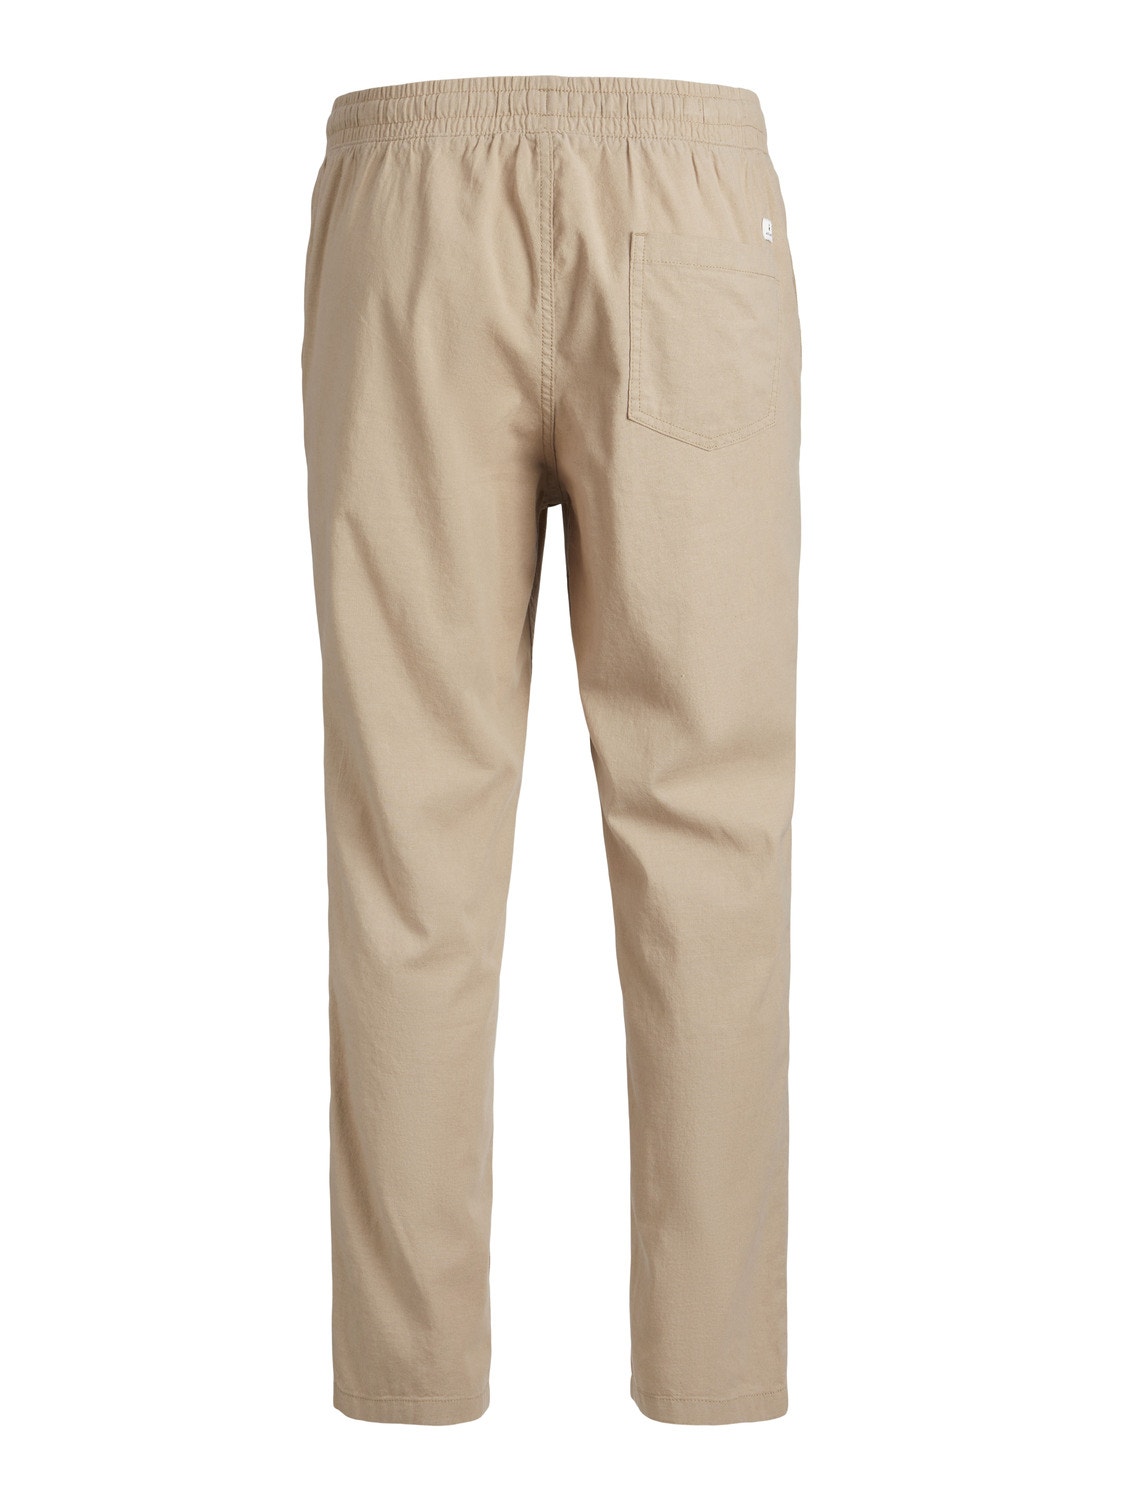 Jack & Jones Tapered Fit Classic trousers -Crockery - 12229699